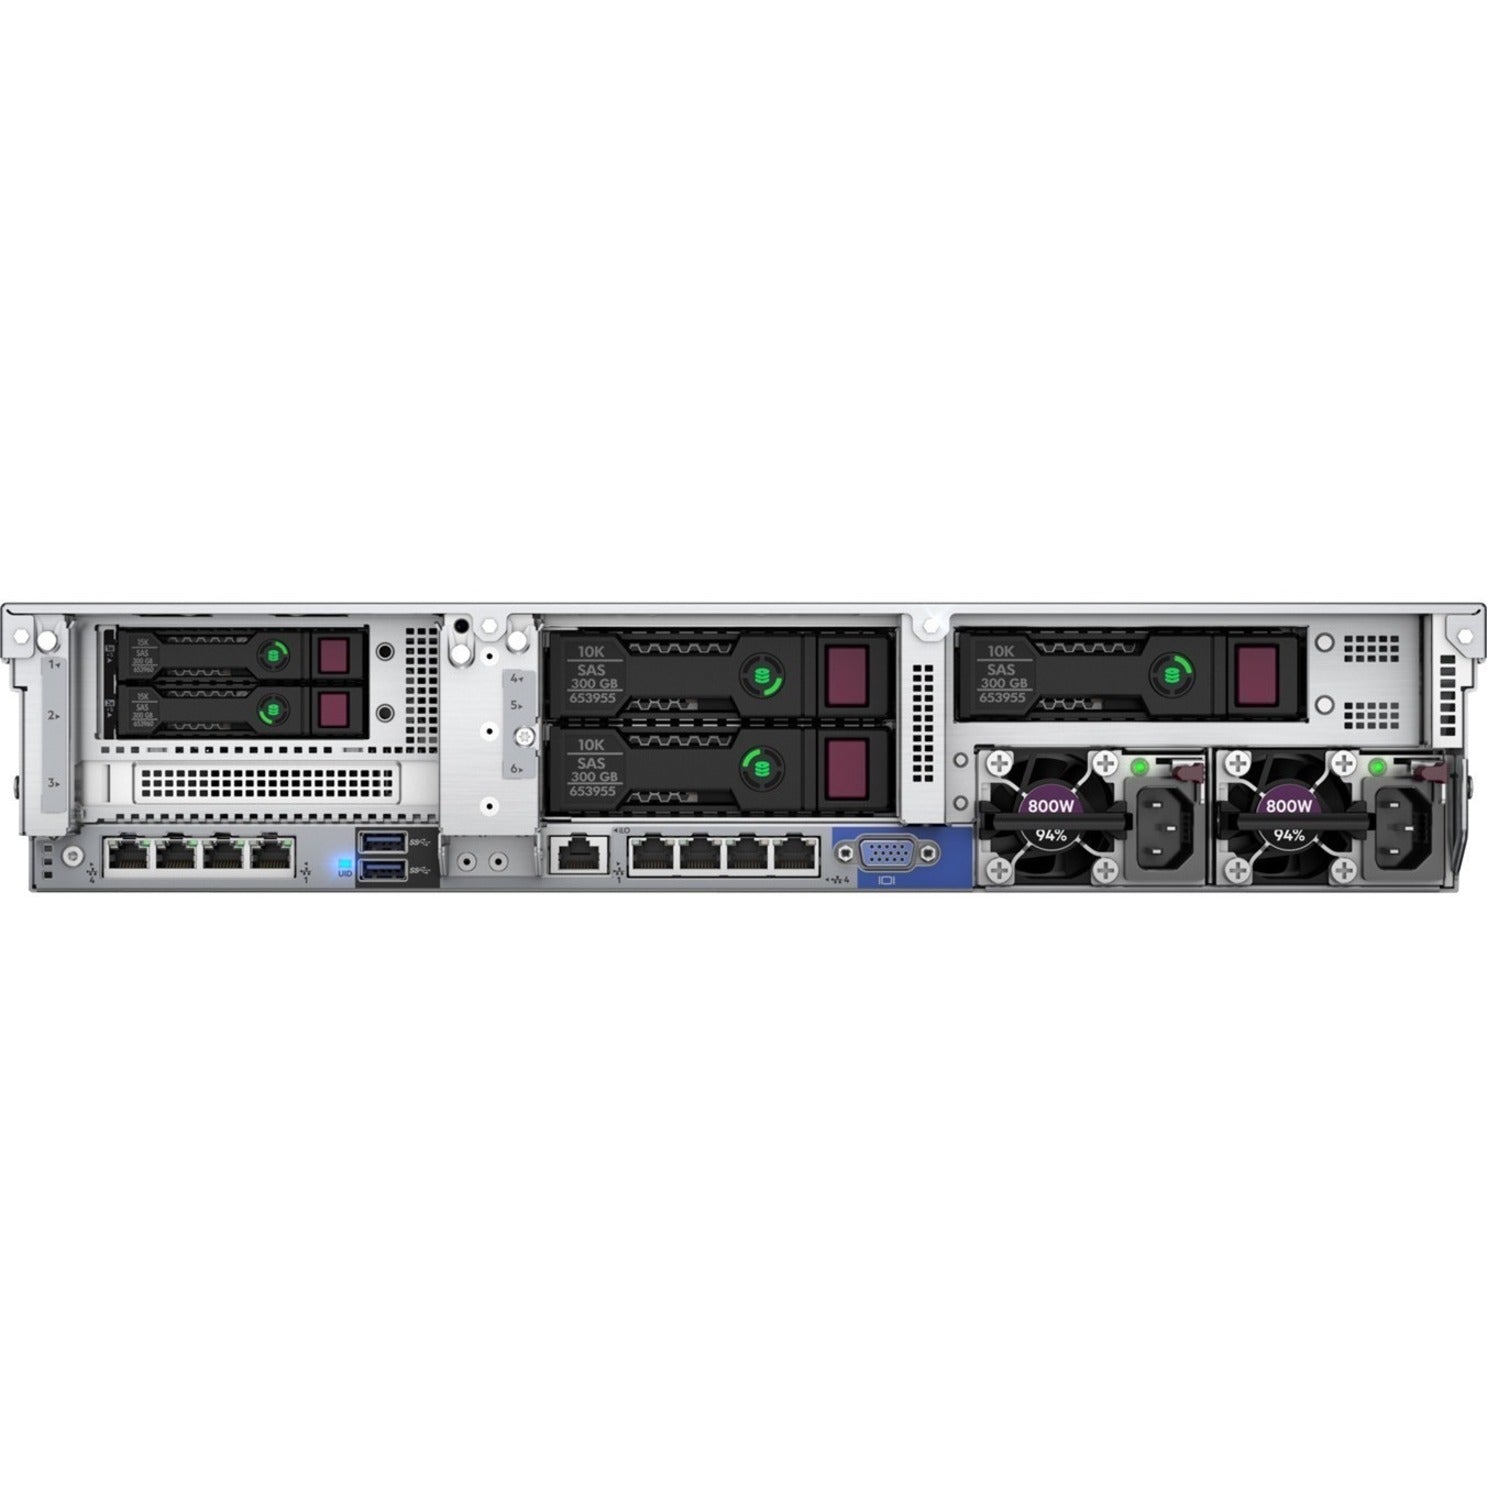 HPE ProLiant DL380 G10 Server - Powerful Performance, 32GB RAM, 8SFF Bays [Discontinued]